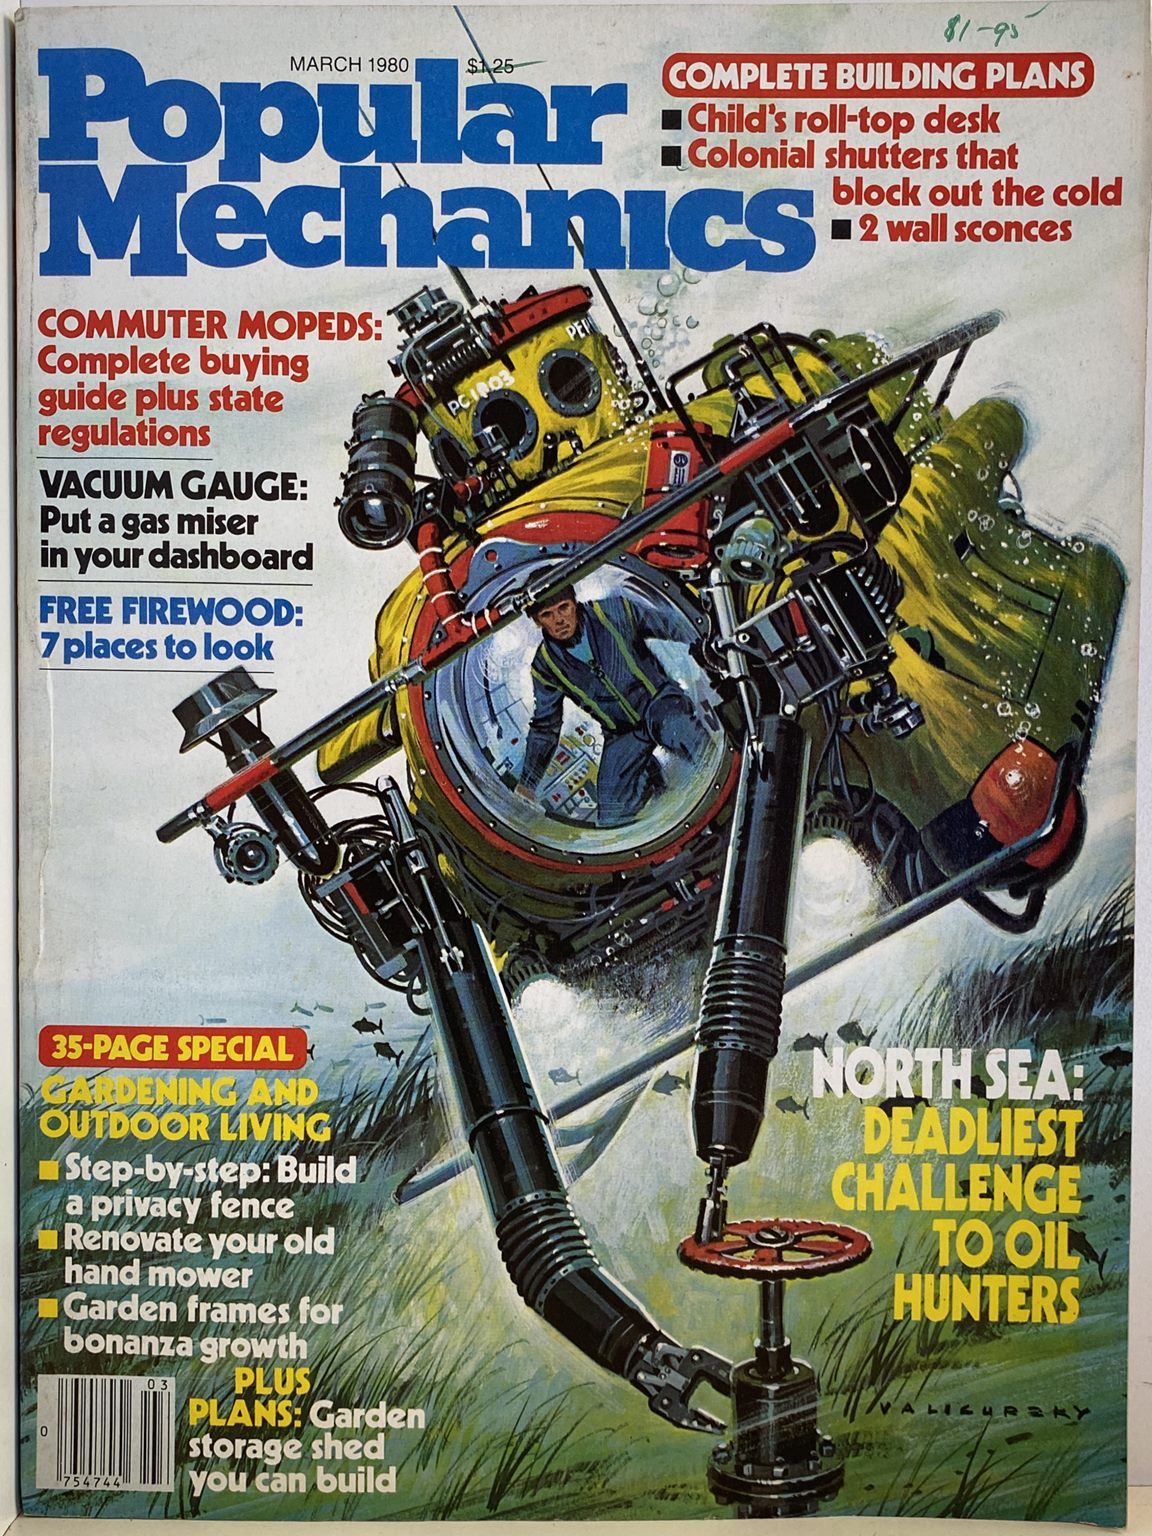 VINTAGE MAGAZINE: Popular Mechanics - Vol. 153, No. 3 - March 1980